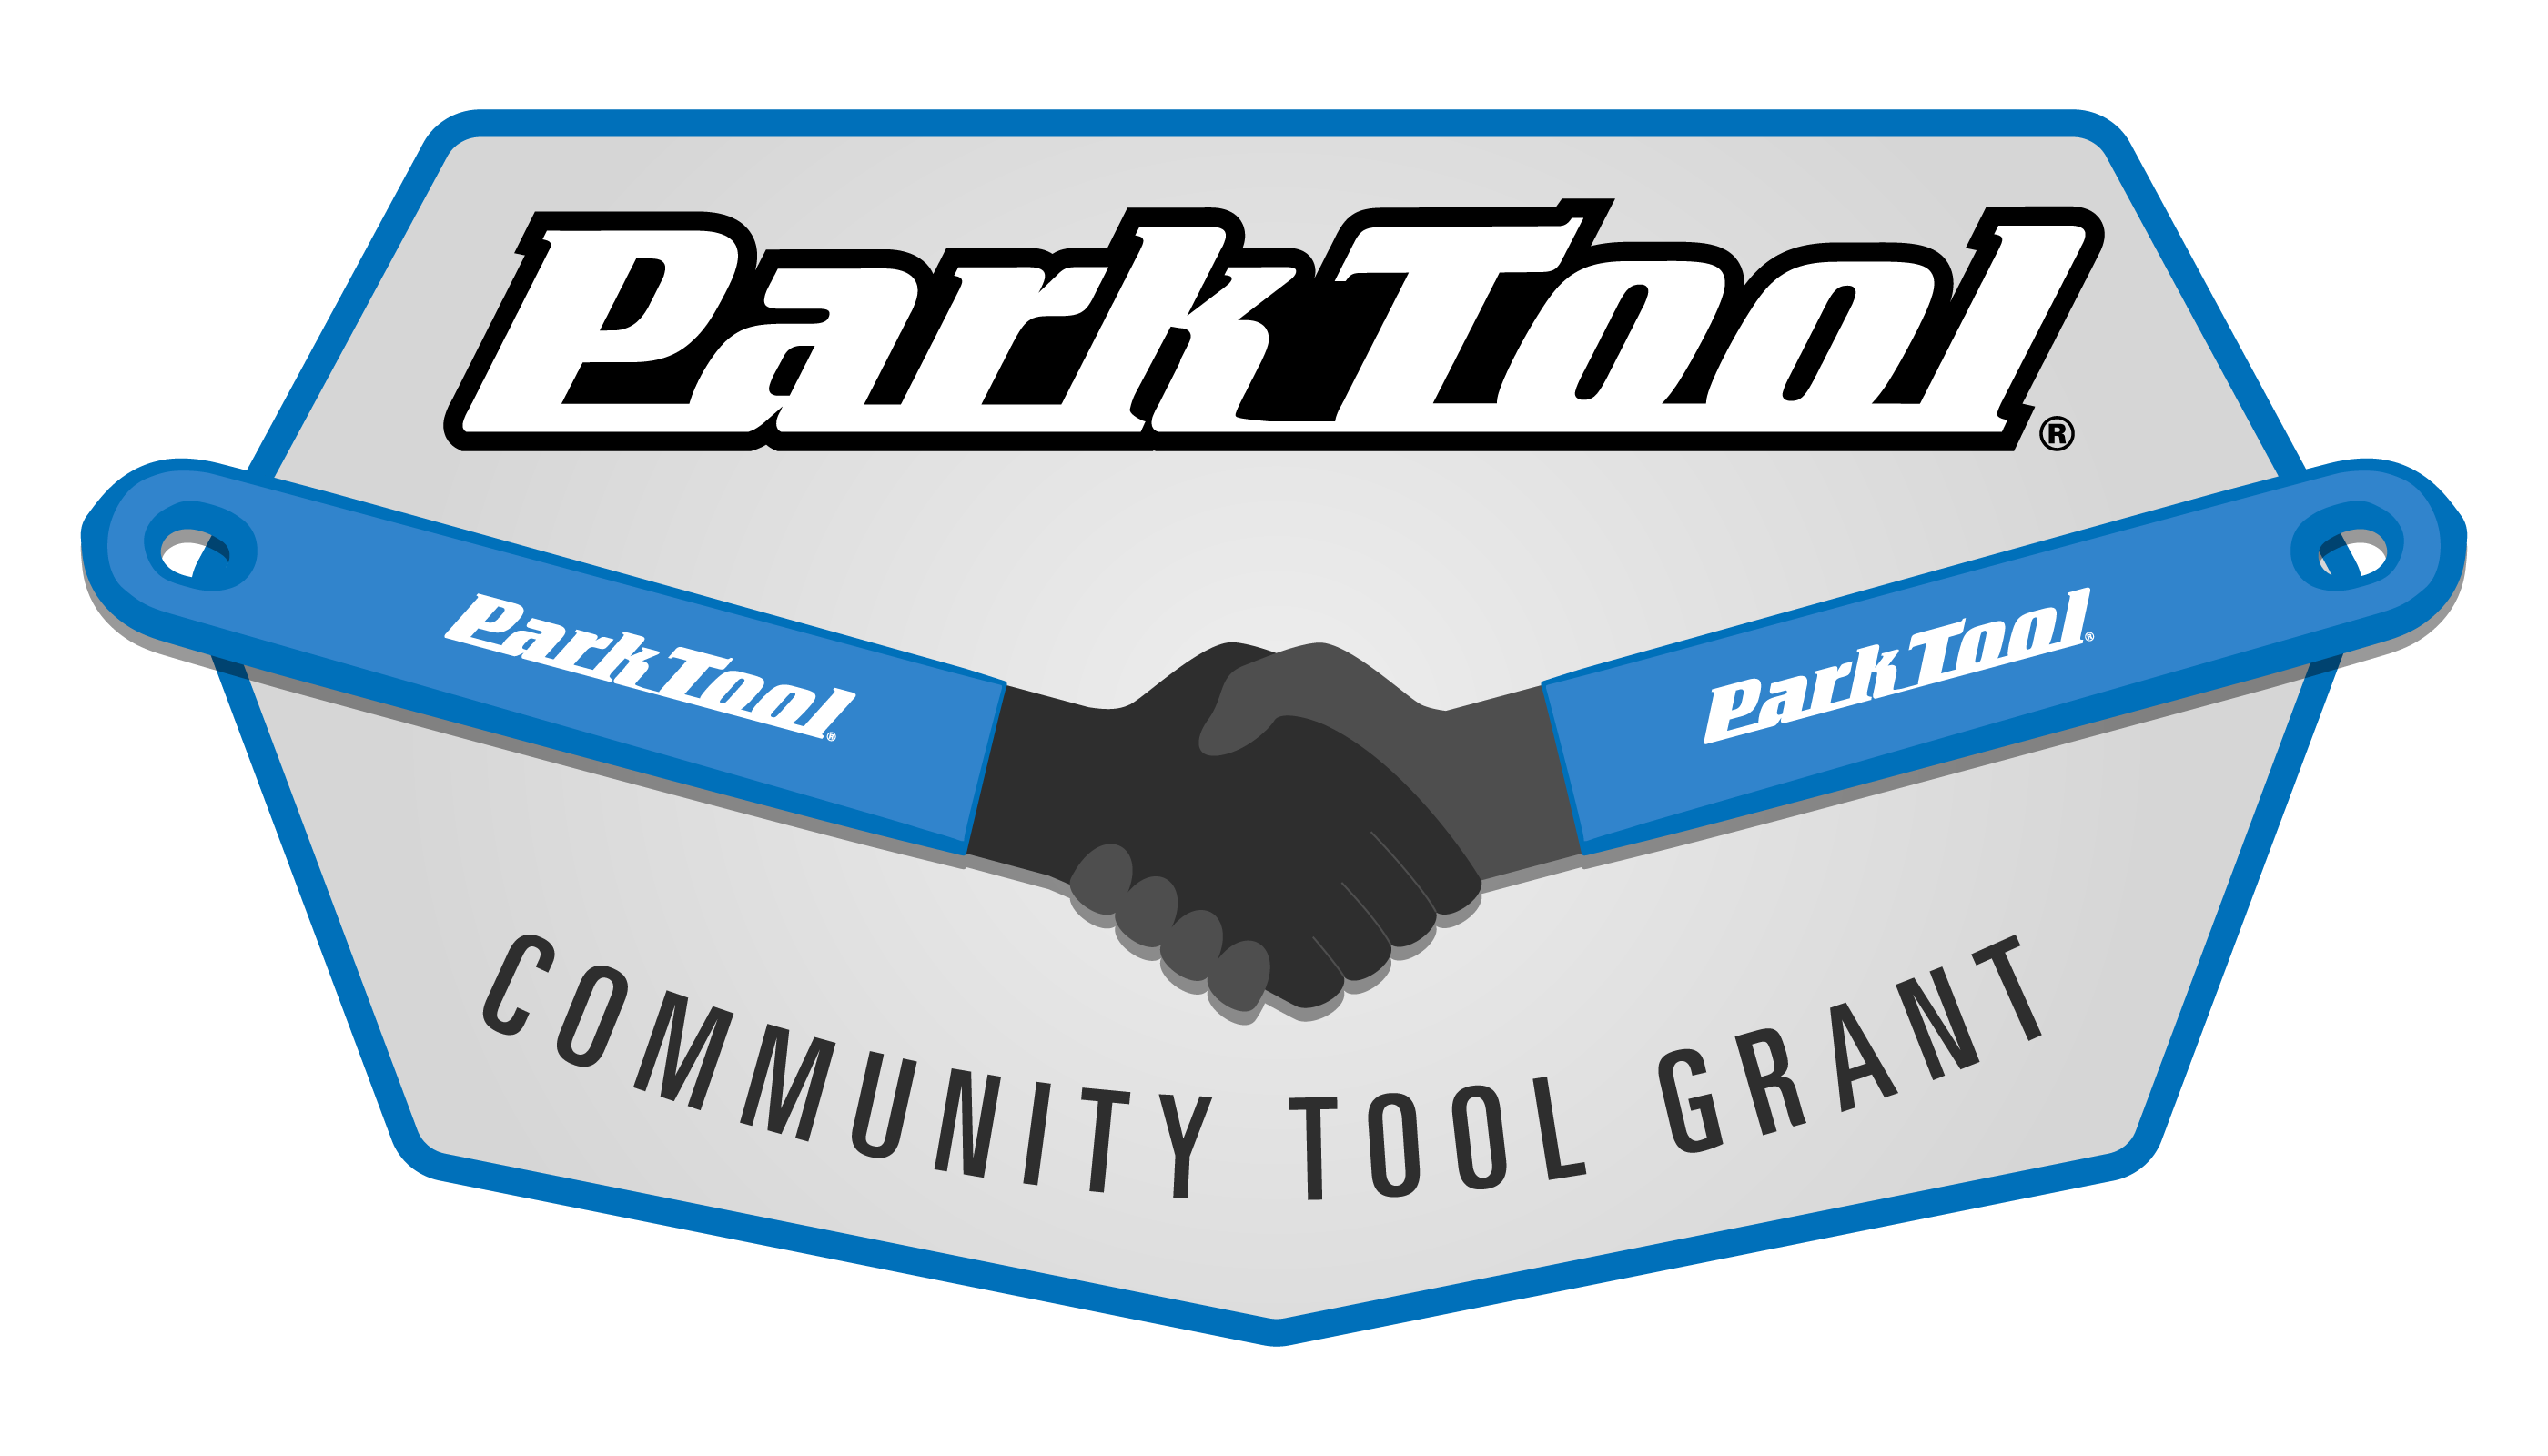 Park Tool Community Tool Grant logo